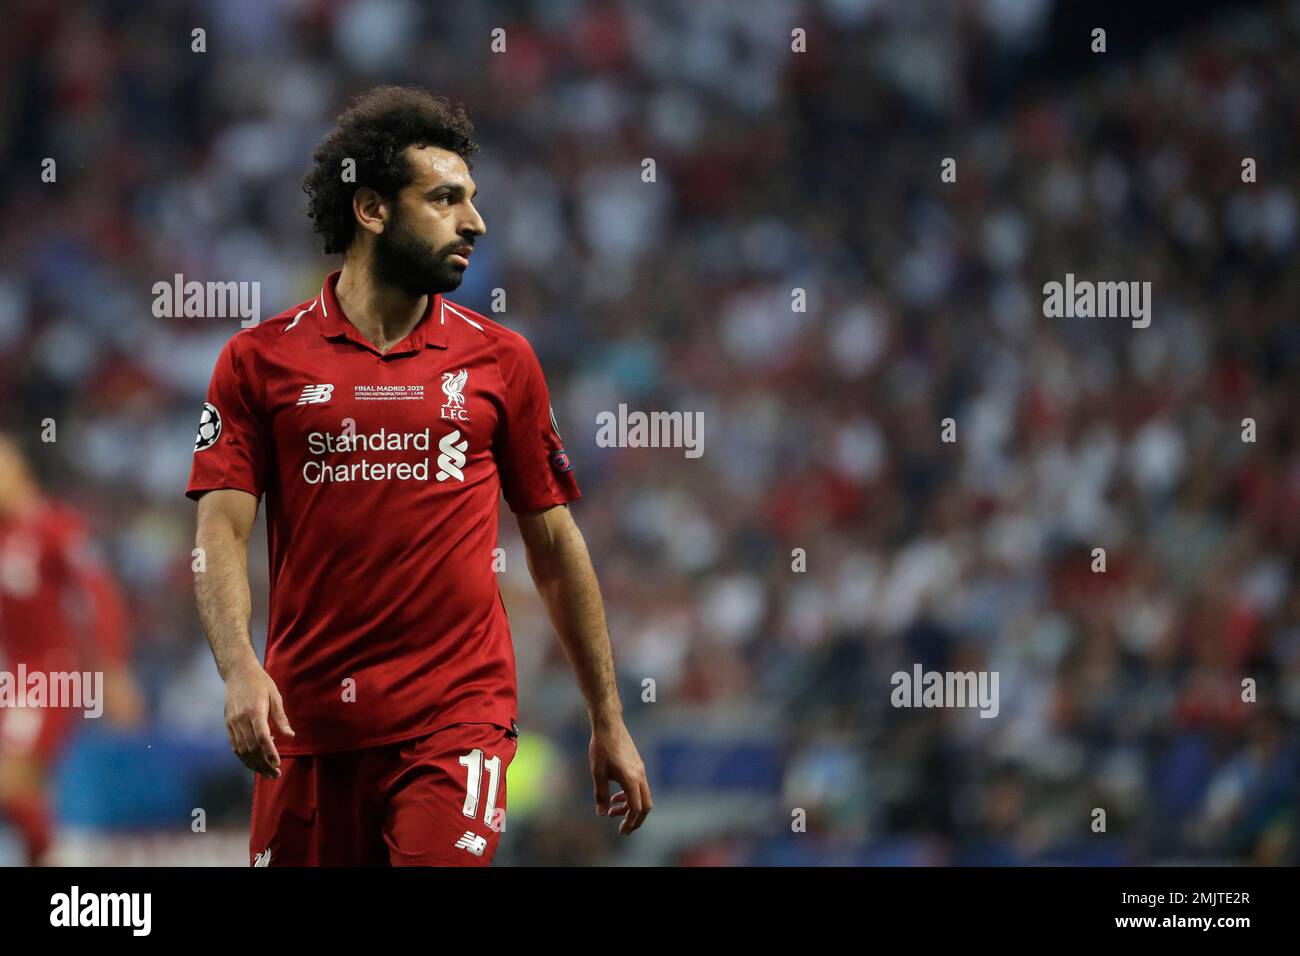 Nike Mohamed Salah Liverpool 2023/24 Third Stadium Replica Player Jersey in  Purple for Men